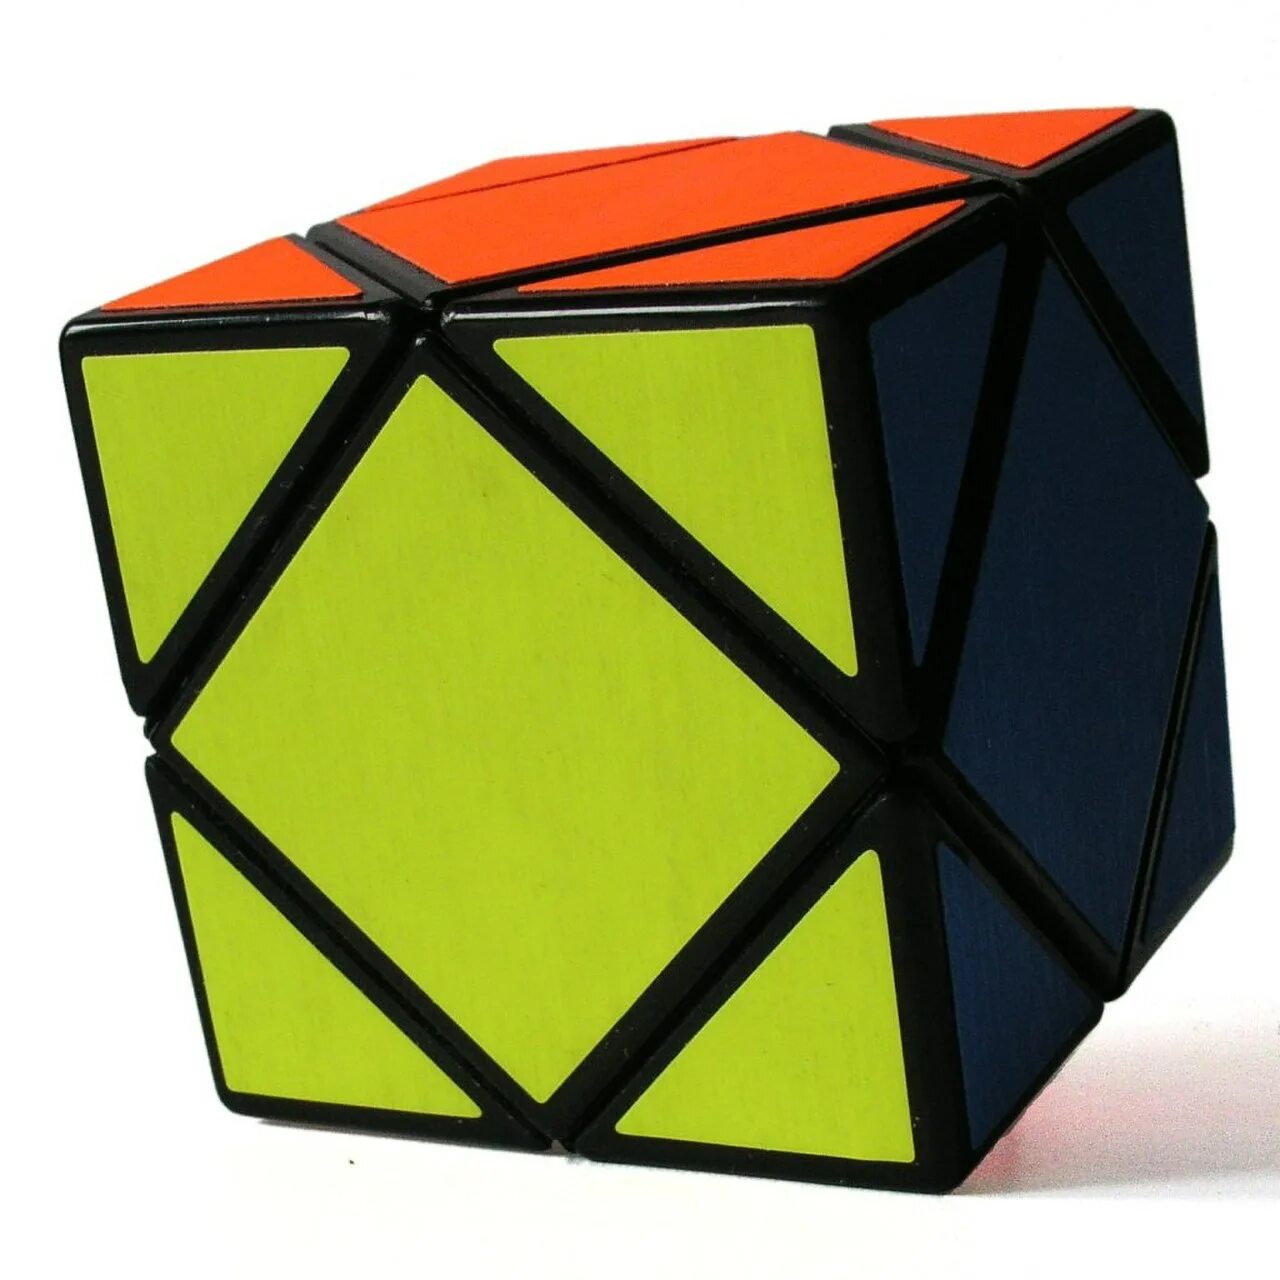 Xross cube. Кубик Рубика Skewb. Головоломка Meffert`s скьюб. Головоломка скьюб 3х3. Фишер скьюб Паритет.